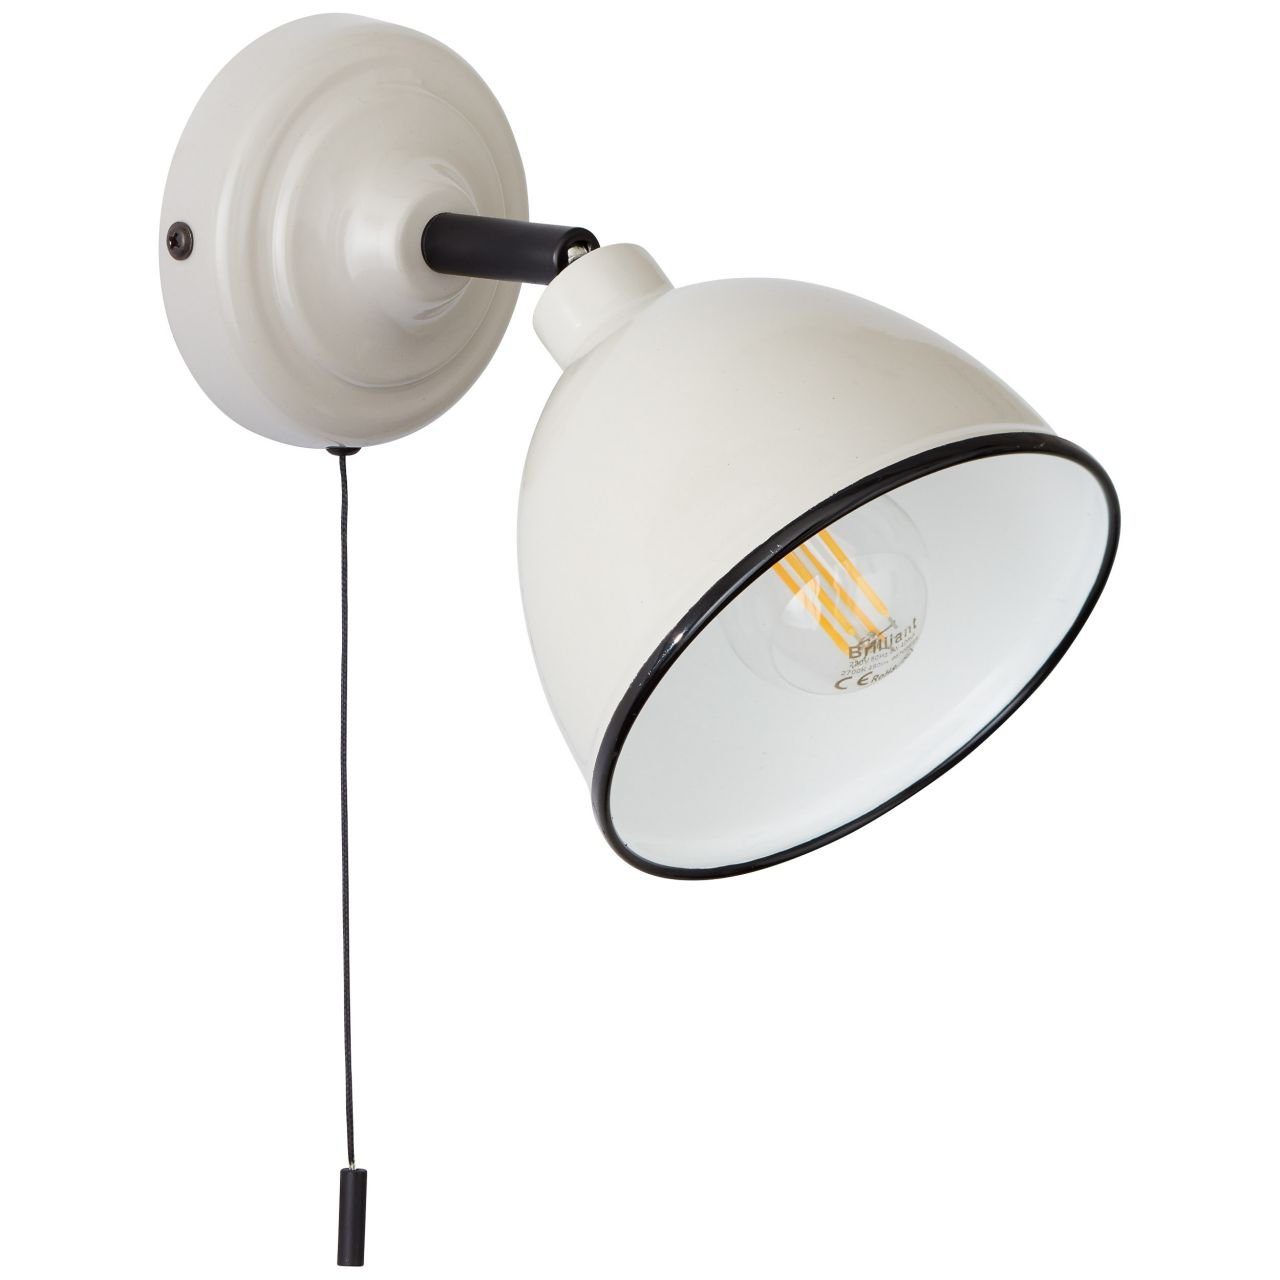 Brilliant Wandleuchte Telio, Lampe D45, gee grau/taupe 1x Telio Wandleuchte 28W, E14, Zugschalter